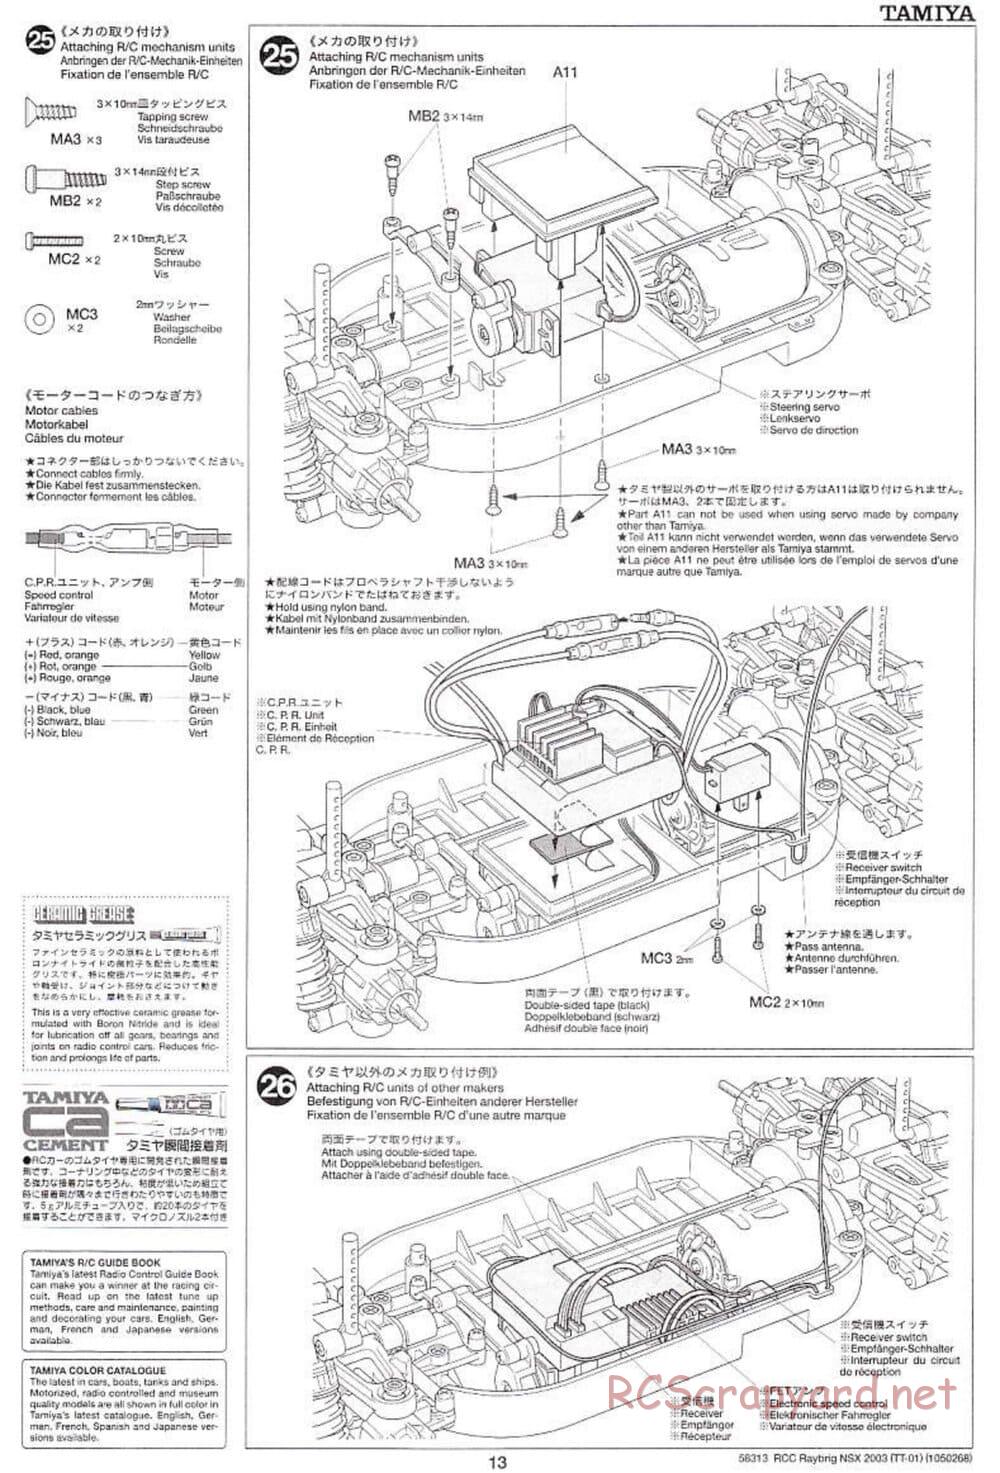 Tamiya - Raybrig NSX 2003 - TT-01 Chassis - Manual - Page 13